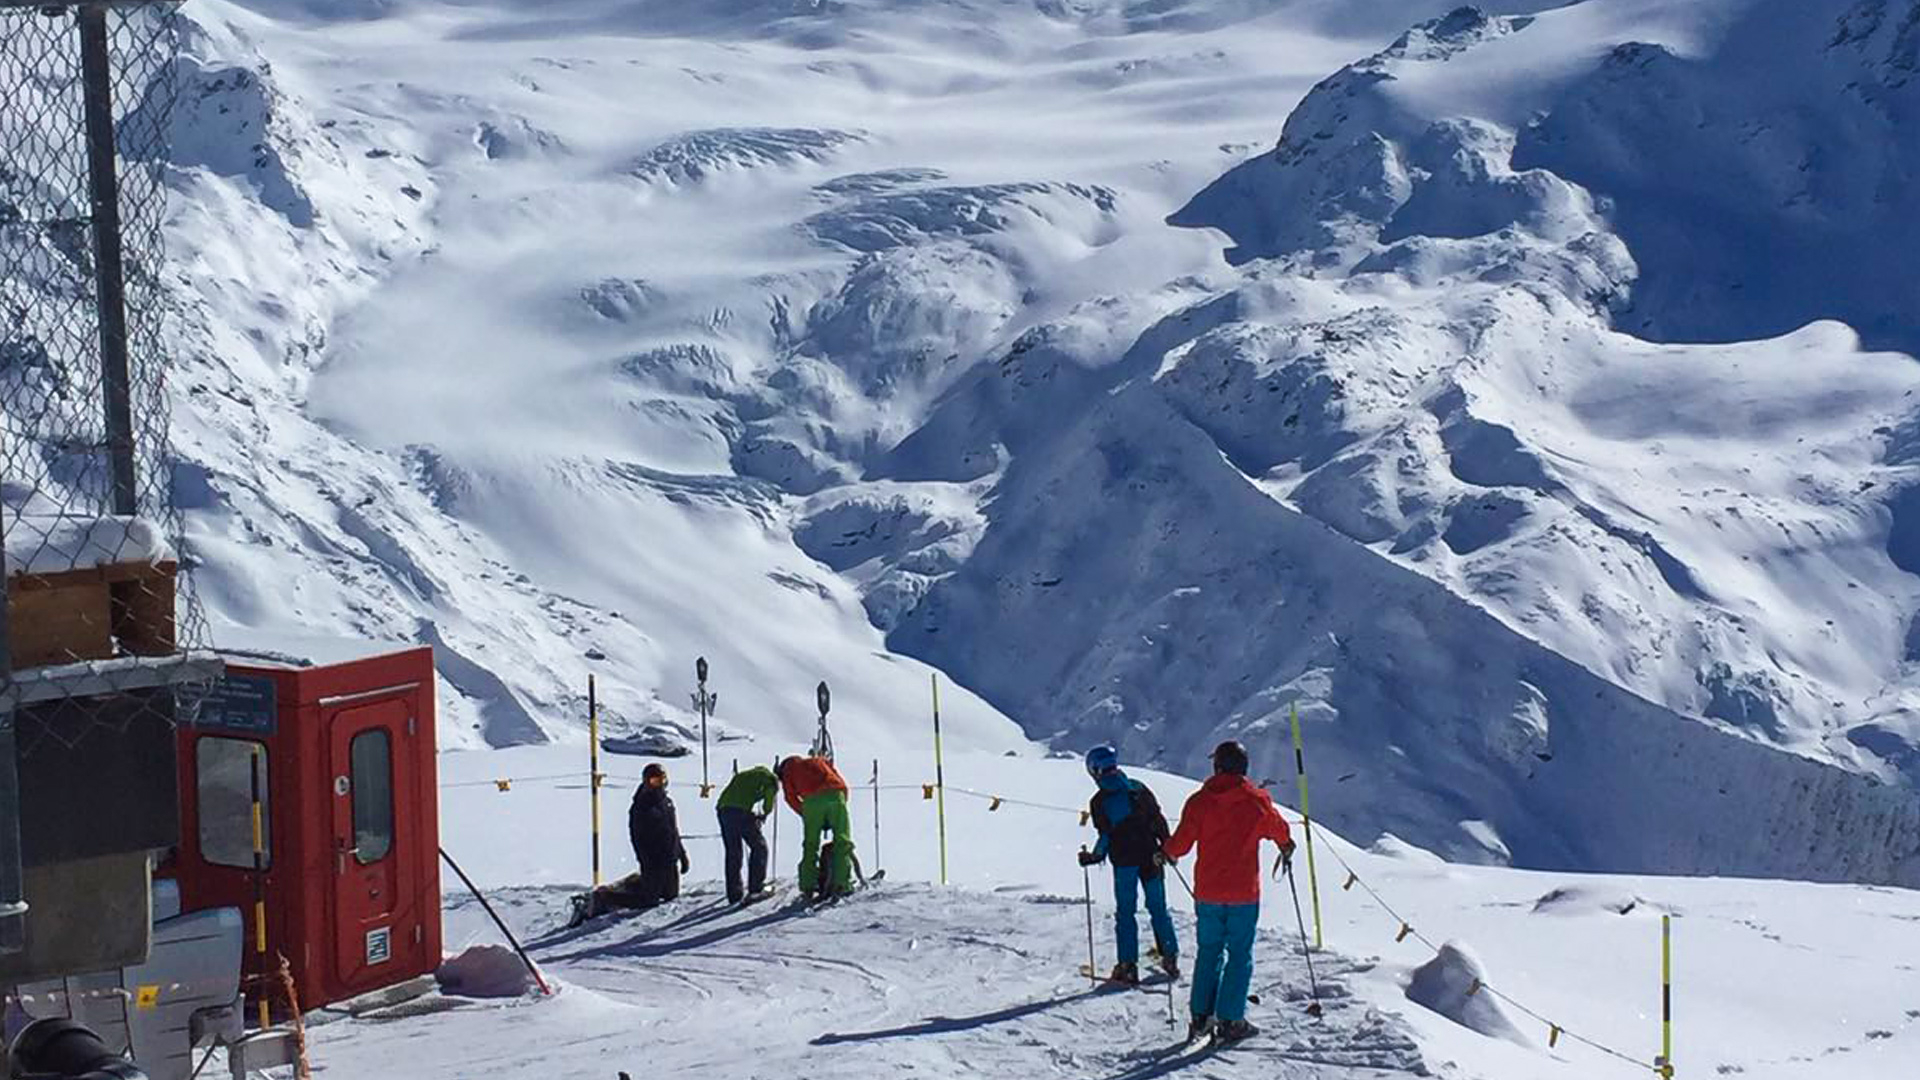 Riffelalp Resort 2'222m in Zermatt. - slide